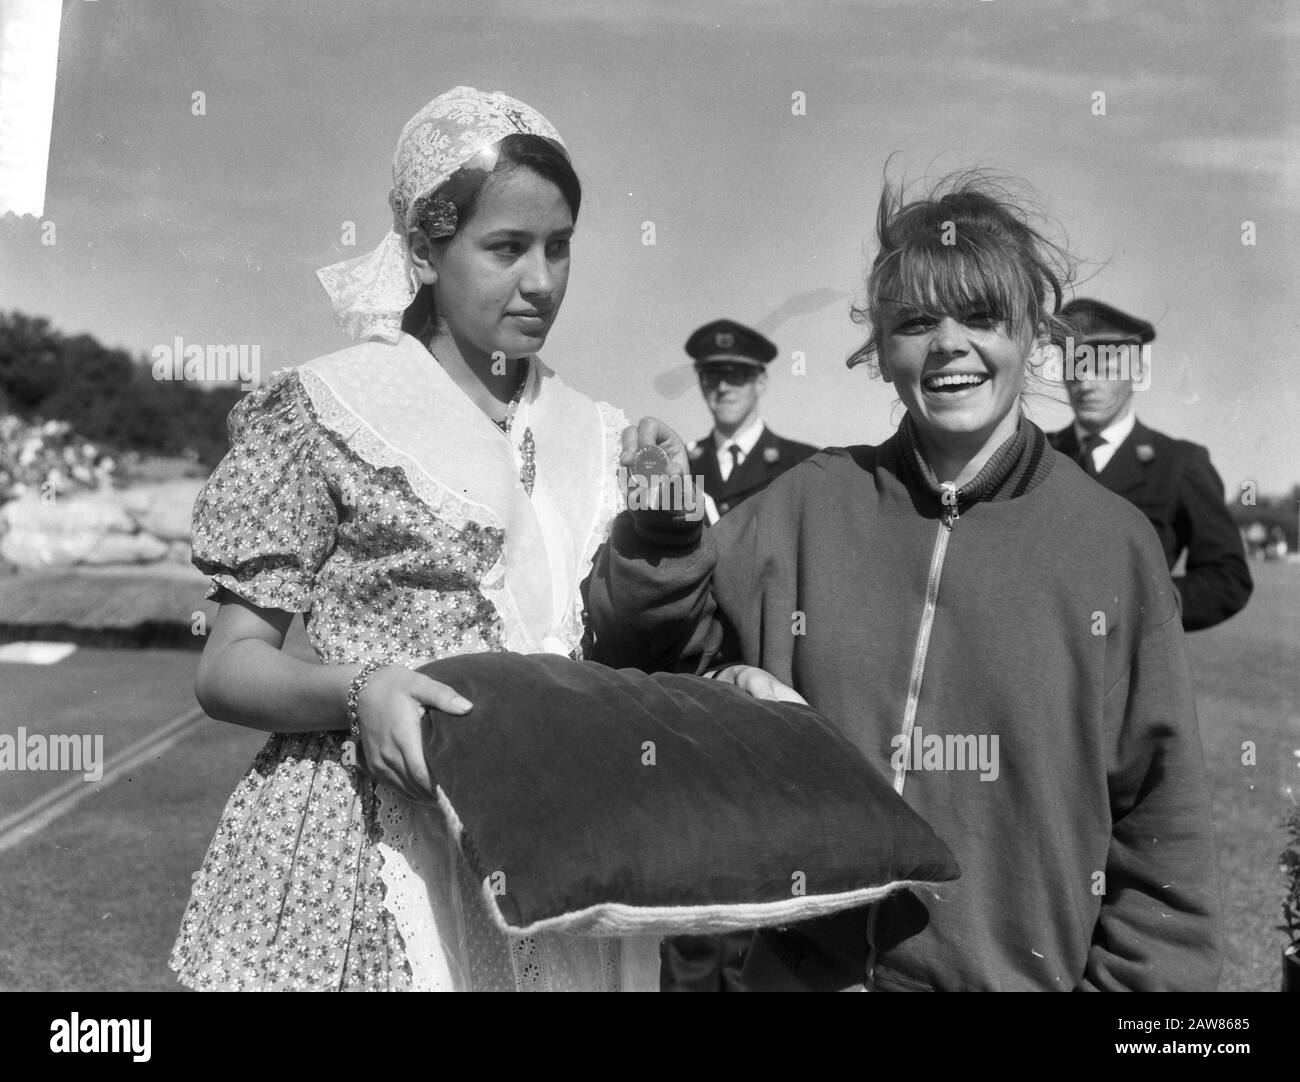 Dutch athletics championships in Groningen, Hilda Slaman Date: August 14, 1965 Location: Groningen Keywords: athletics championships Person Name: Hilda Slaman Stock Photo